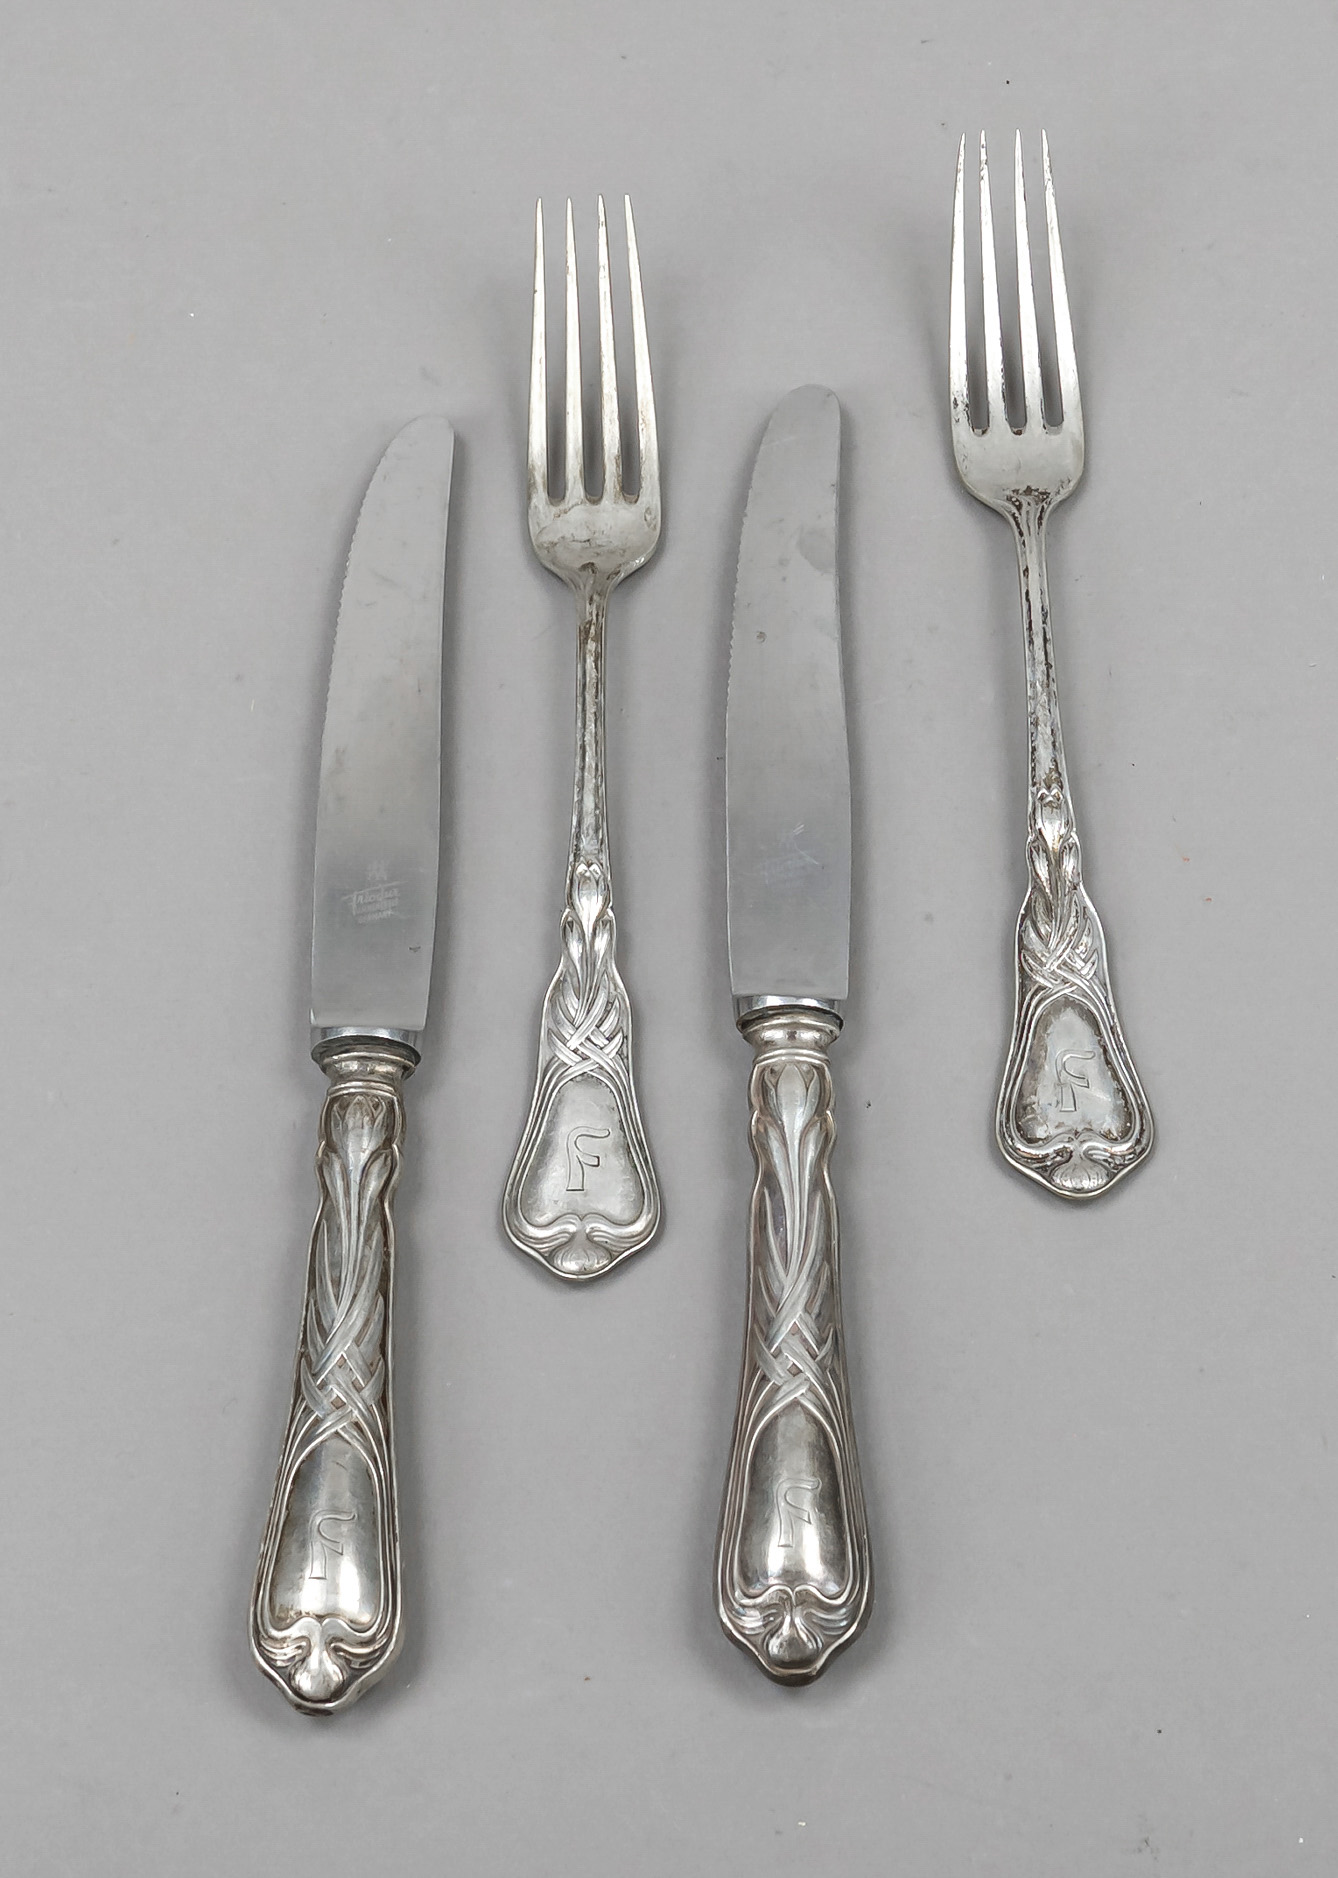 Eleven pieces Art Nouveau cutlery, German, early 20th century, maker's mark M. H. Wilkens & Söhne.